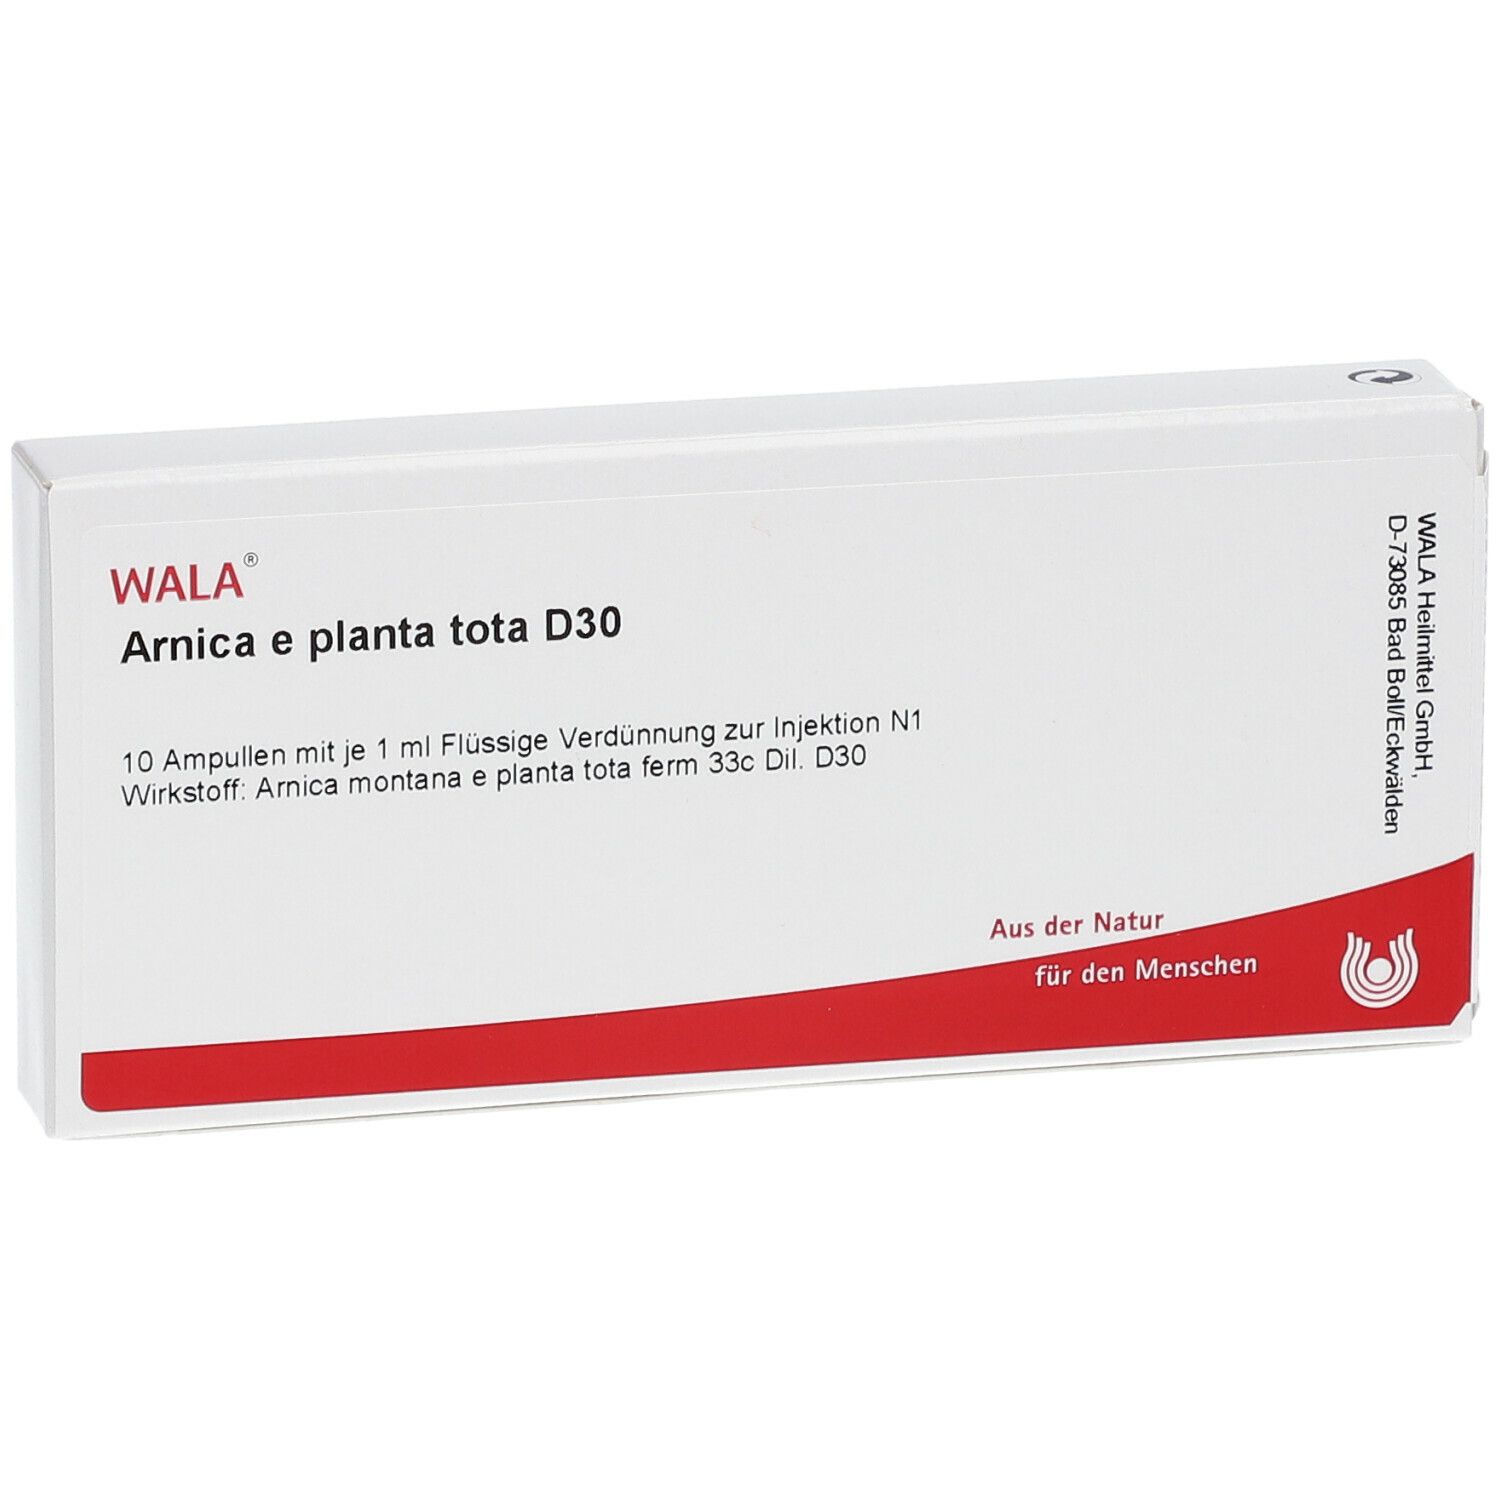 WALA® Arnica E Planta tota D 30 Amp.